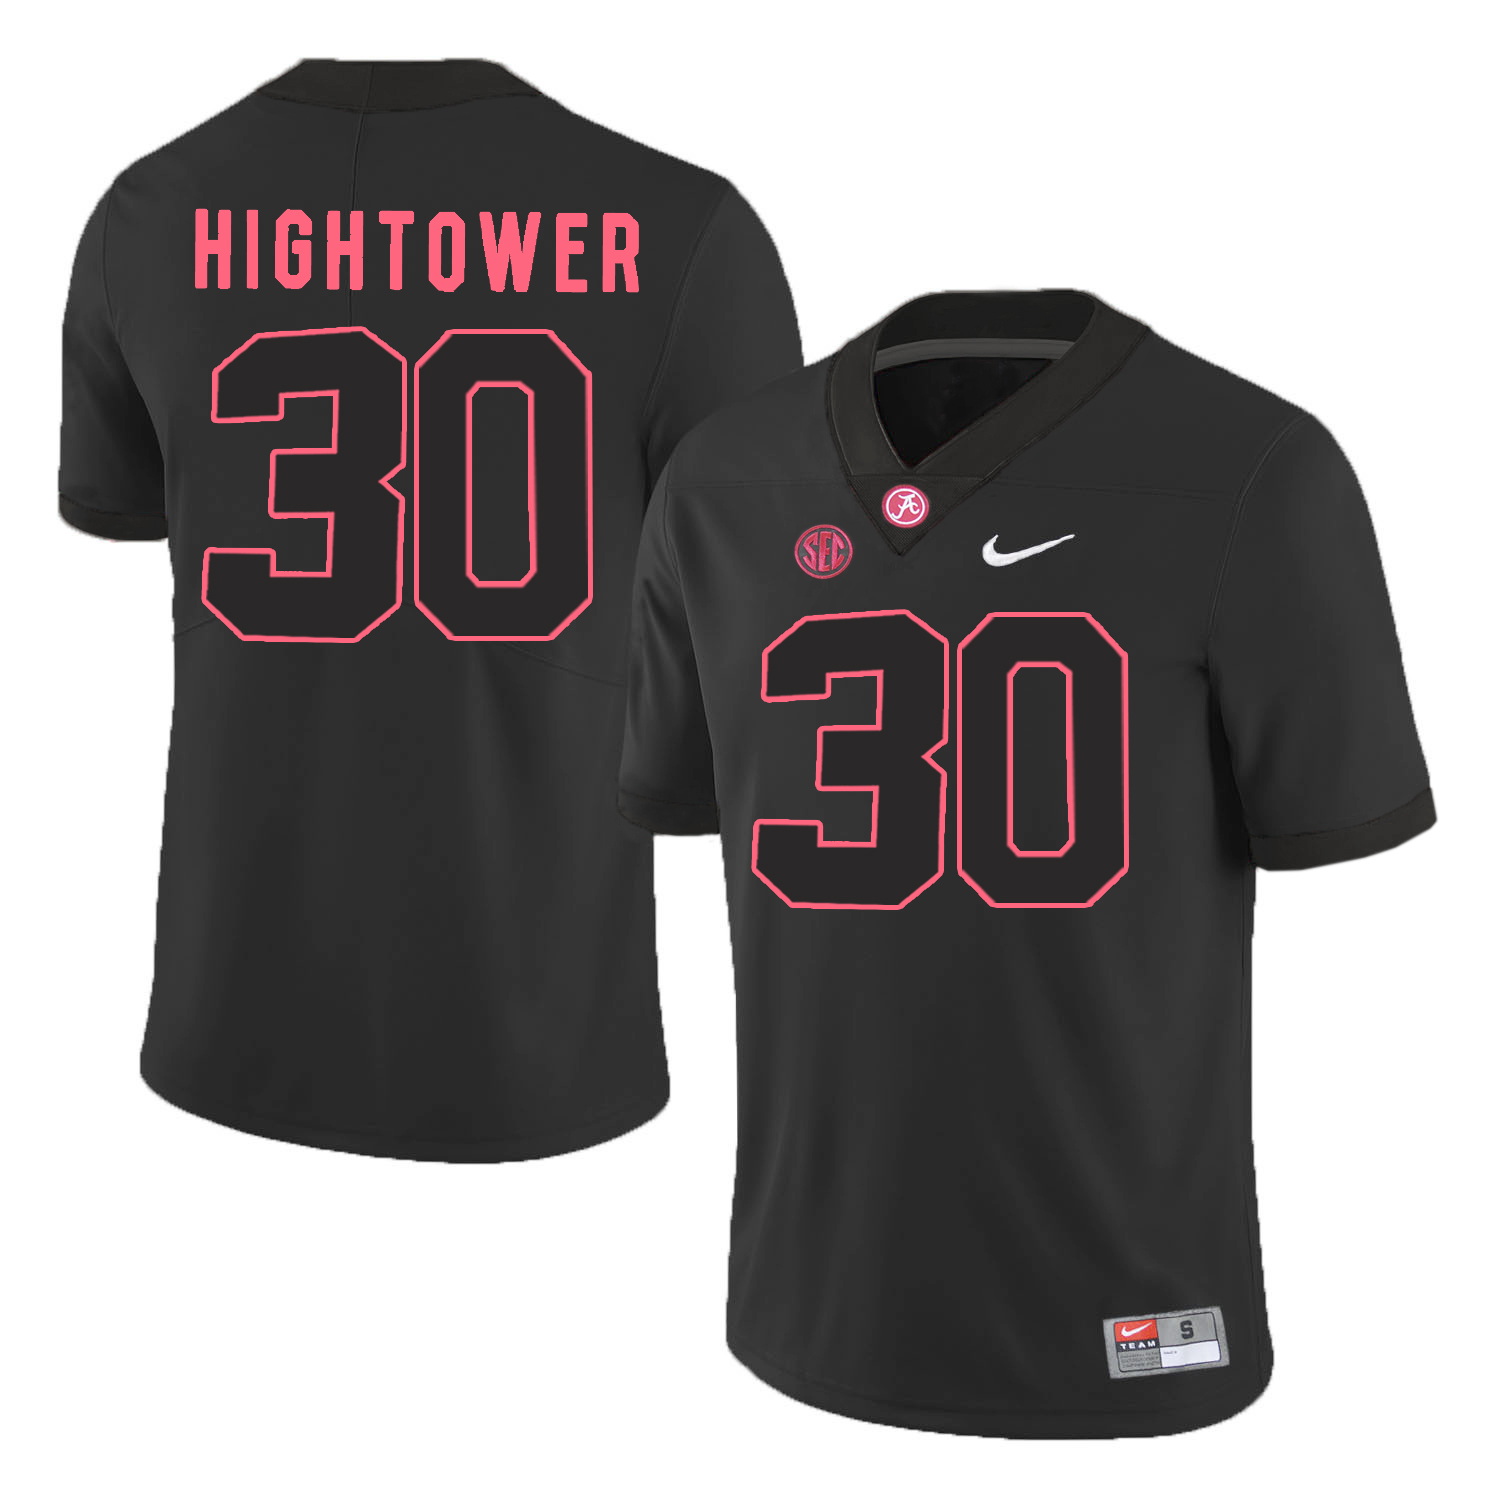 NCAA Alabama Crimson Tide #30 Hightower Black Shawdow Football Jersey